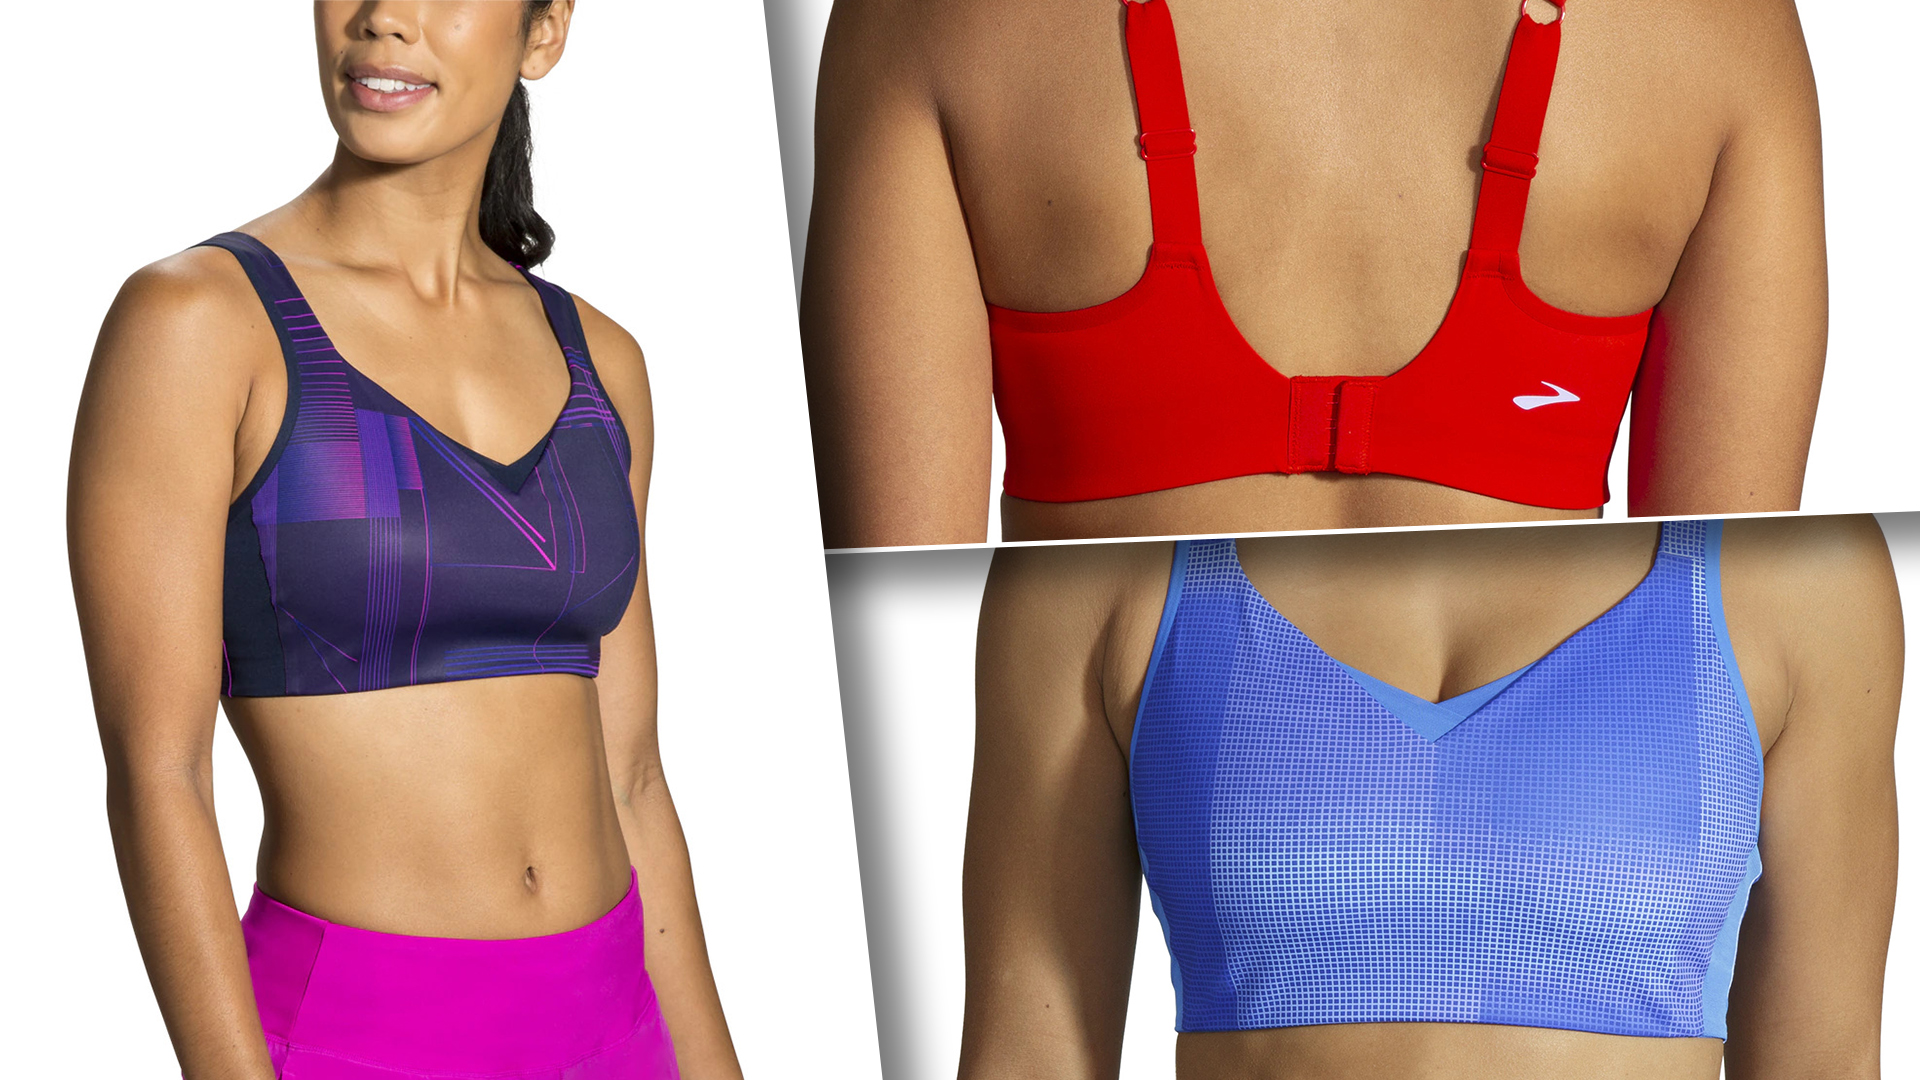 Dominate Sports Bra. Our newest sports bra has a sleek hidden back